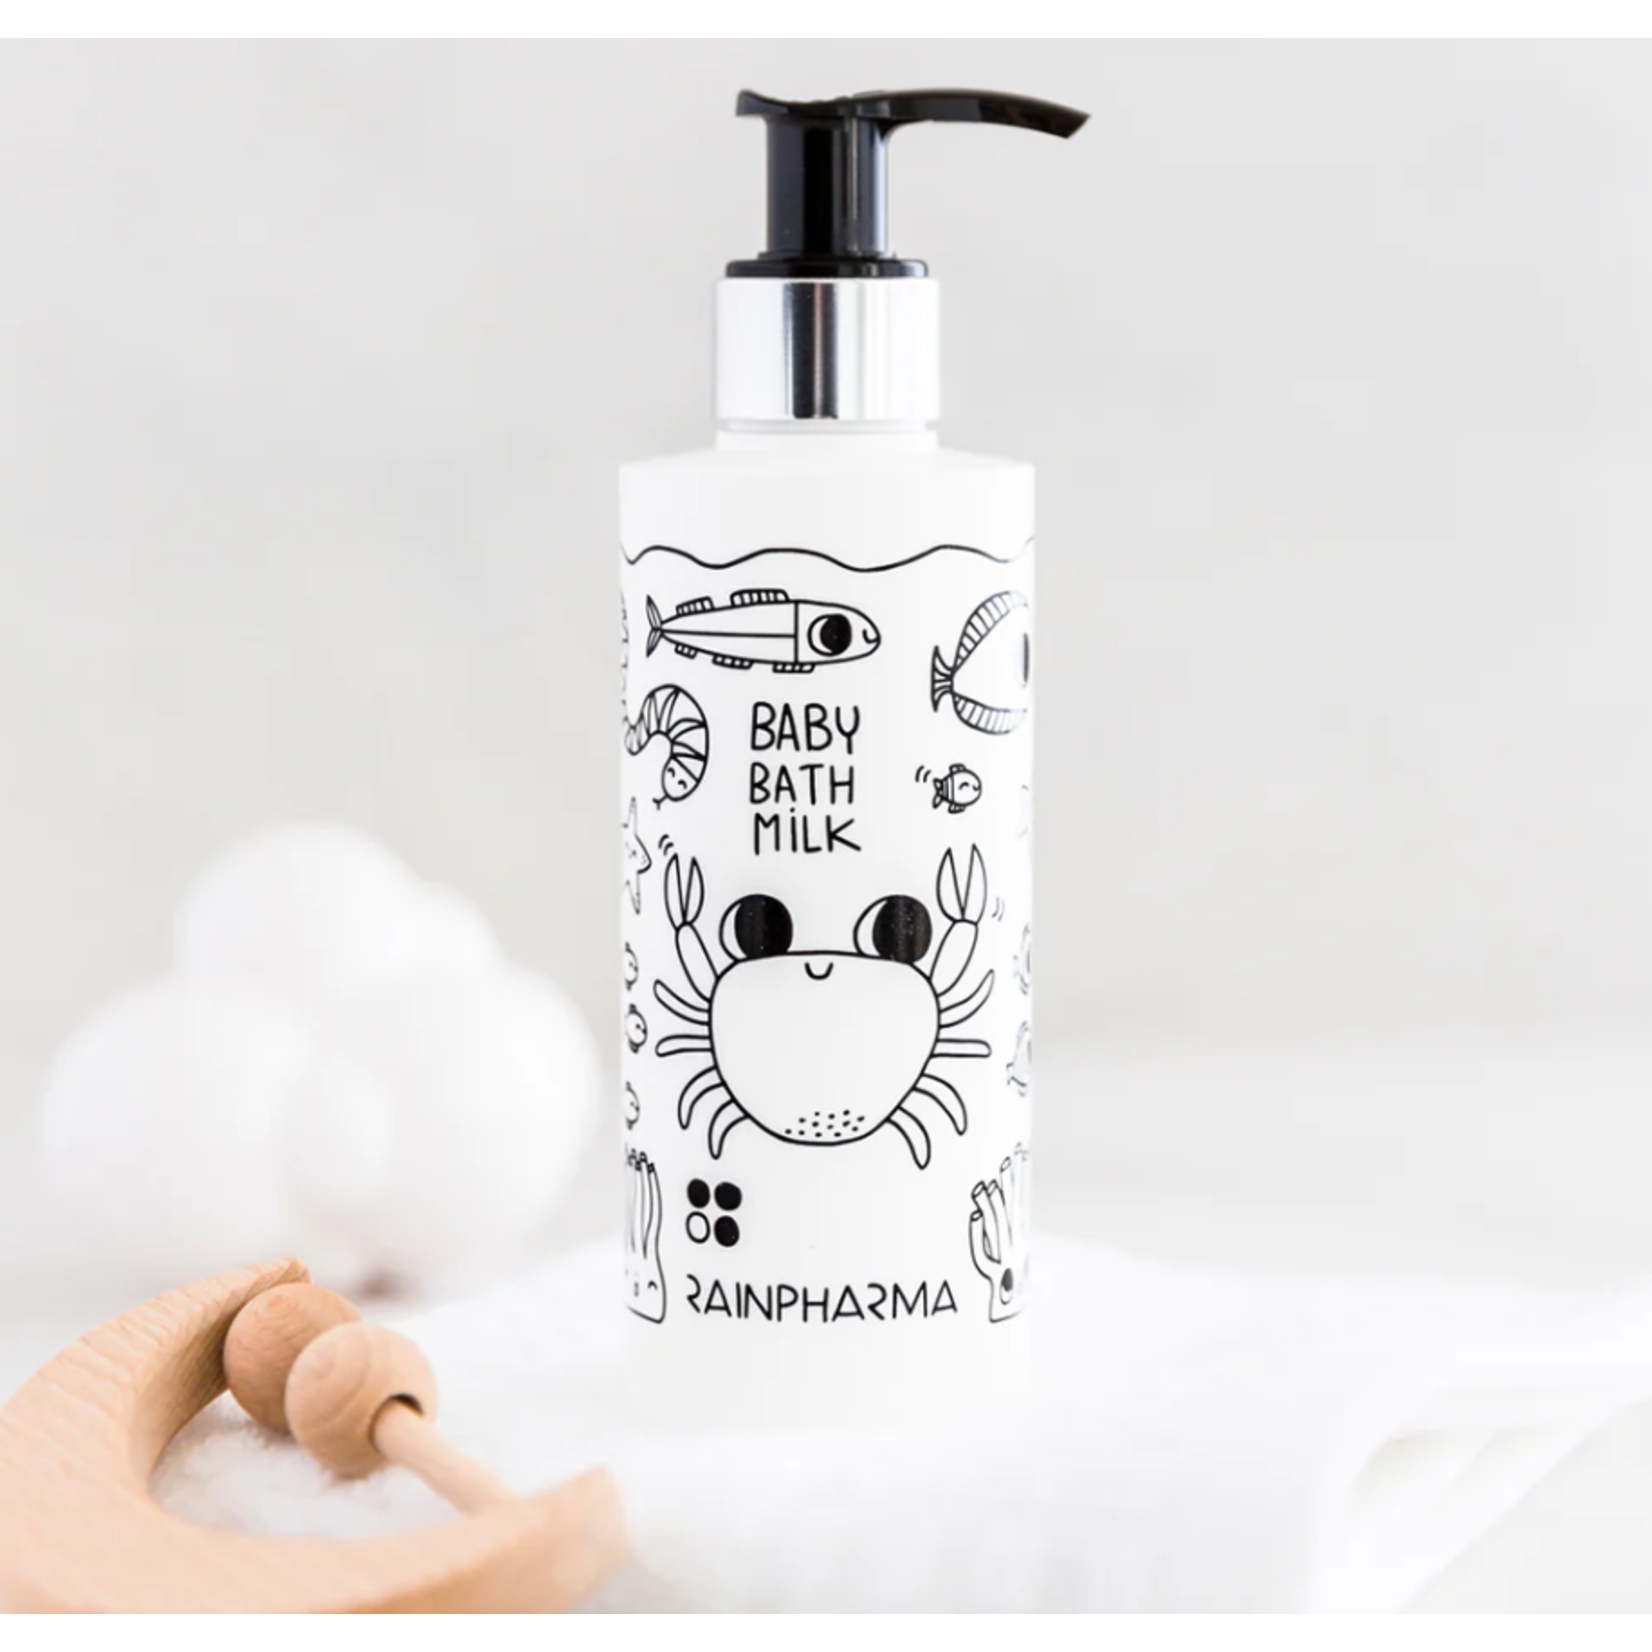 Rainpharma Rainpharma - Babybath milk (Eva Mouton)